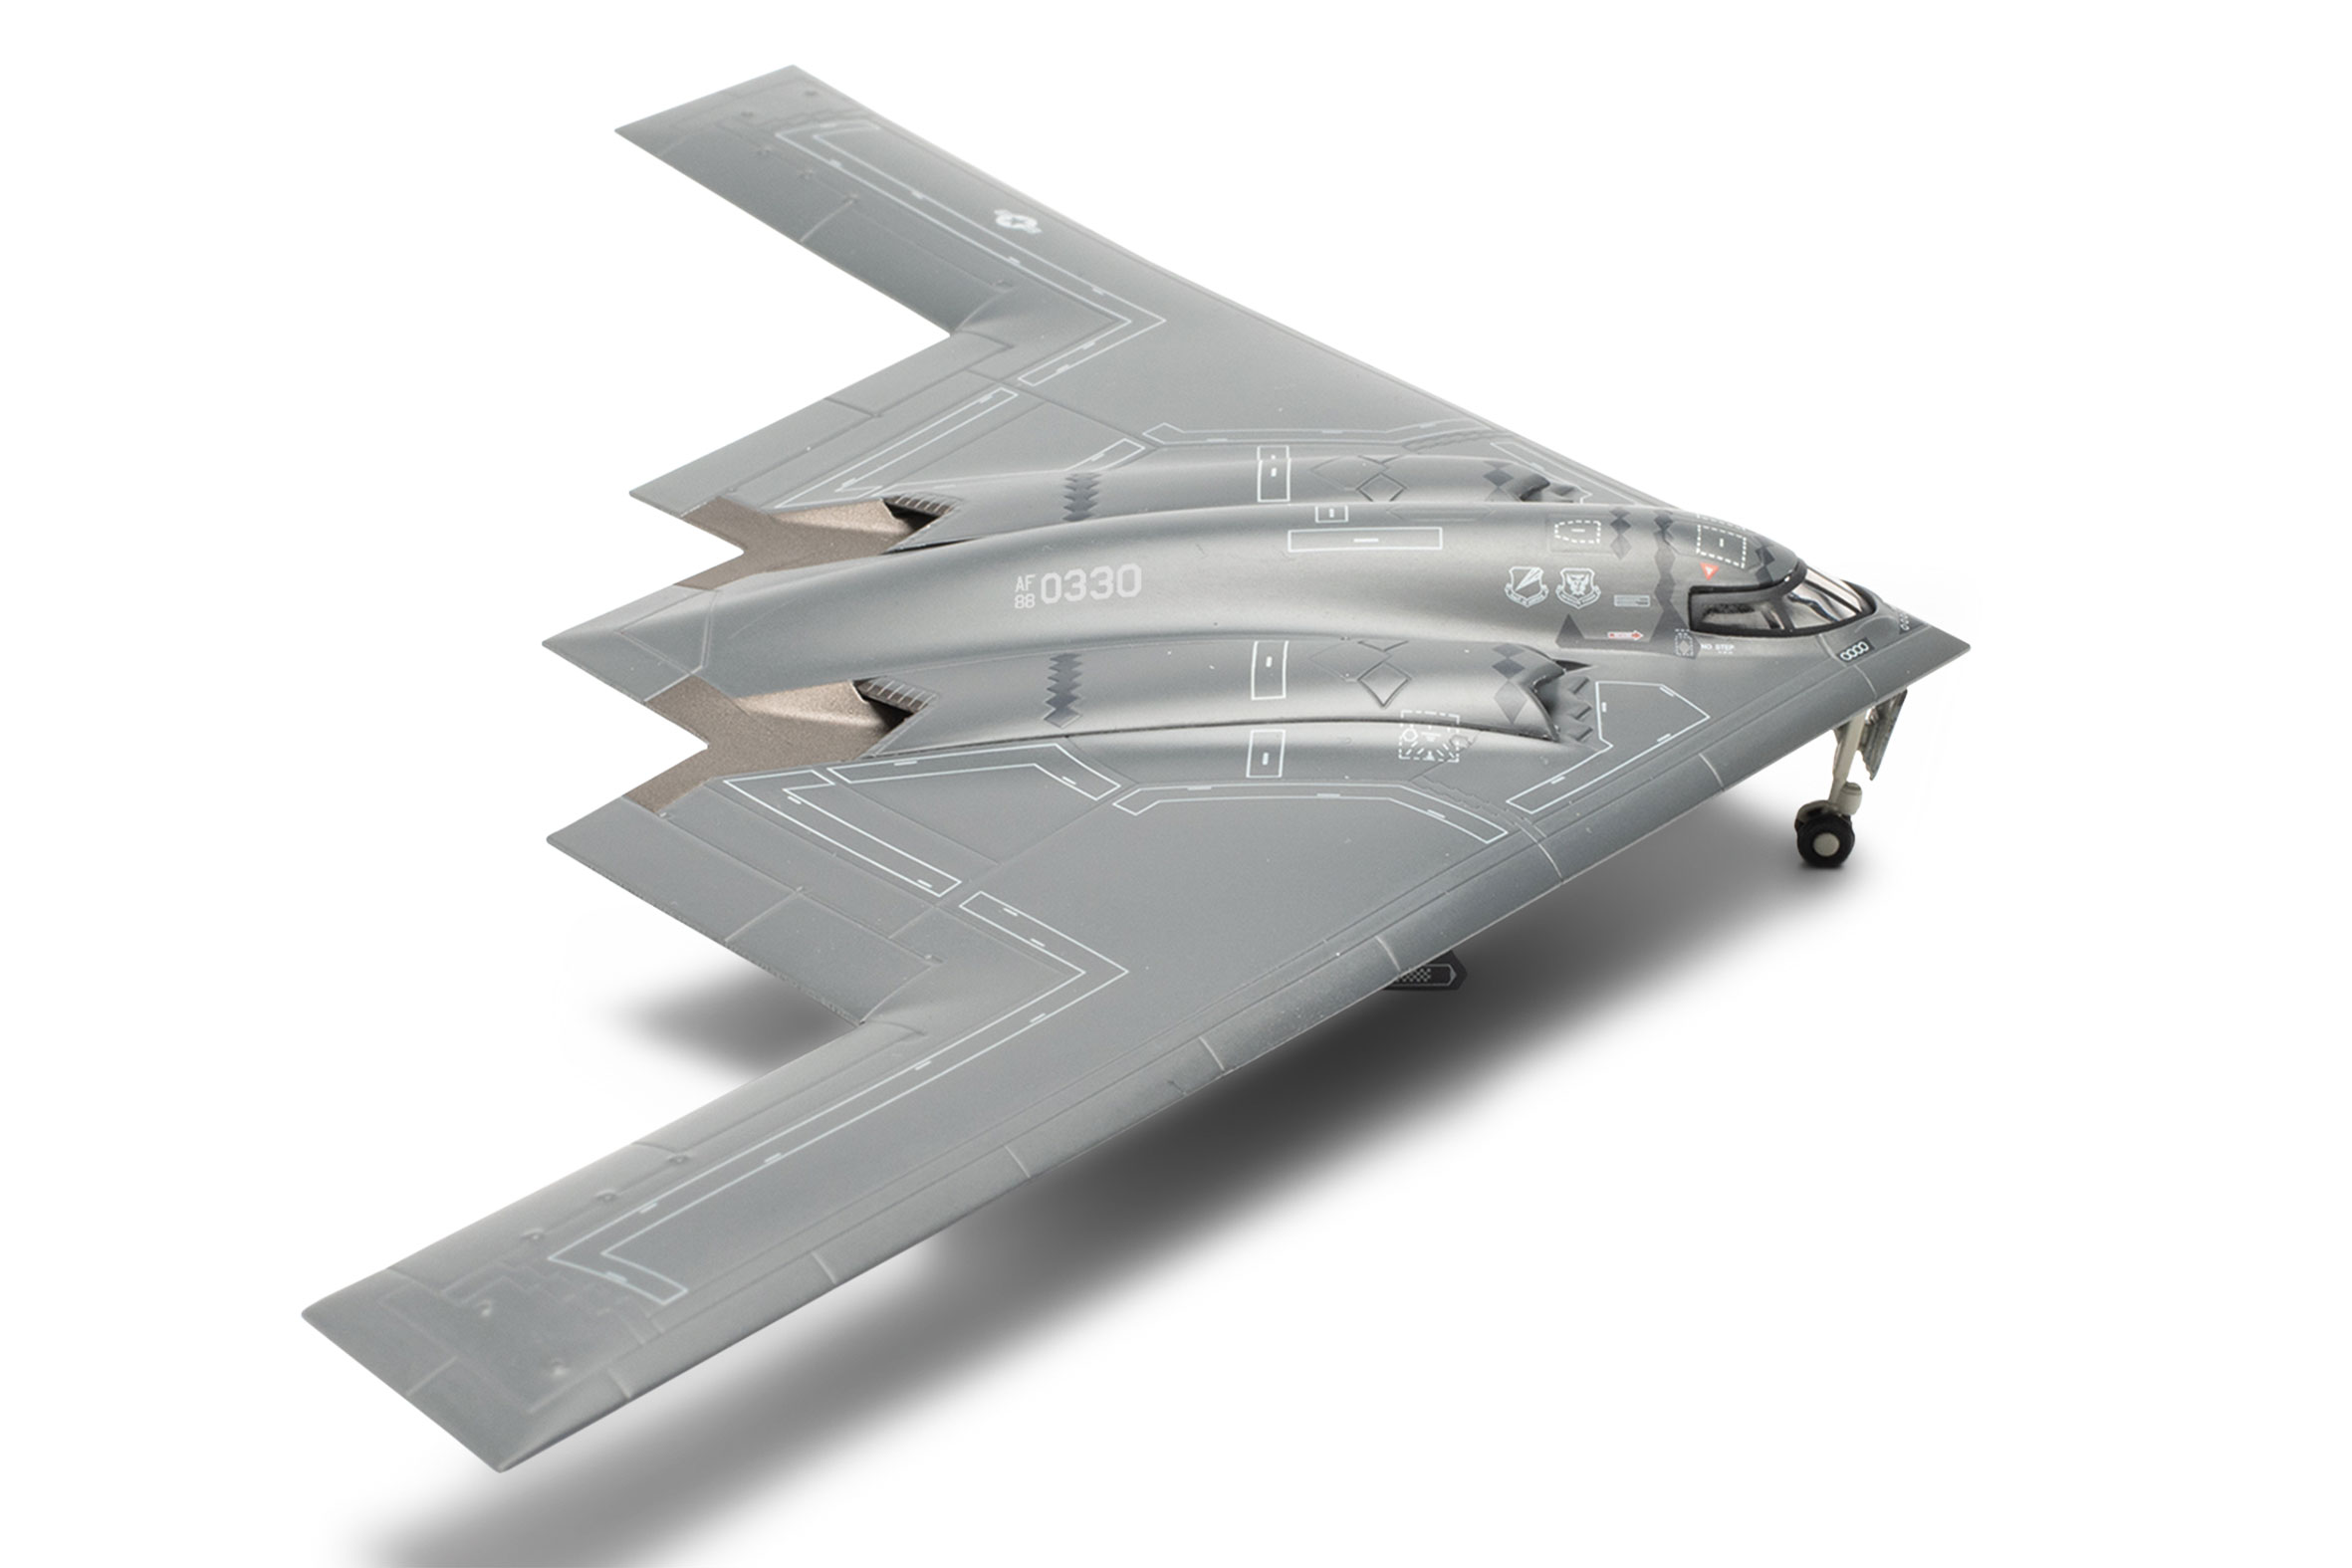 Northrop Grumman B-2A "CA" 1:200